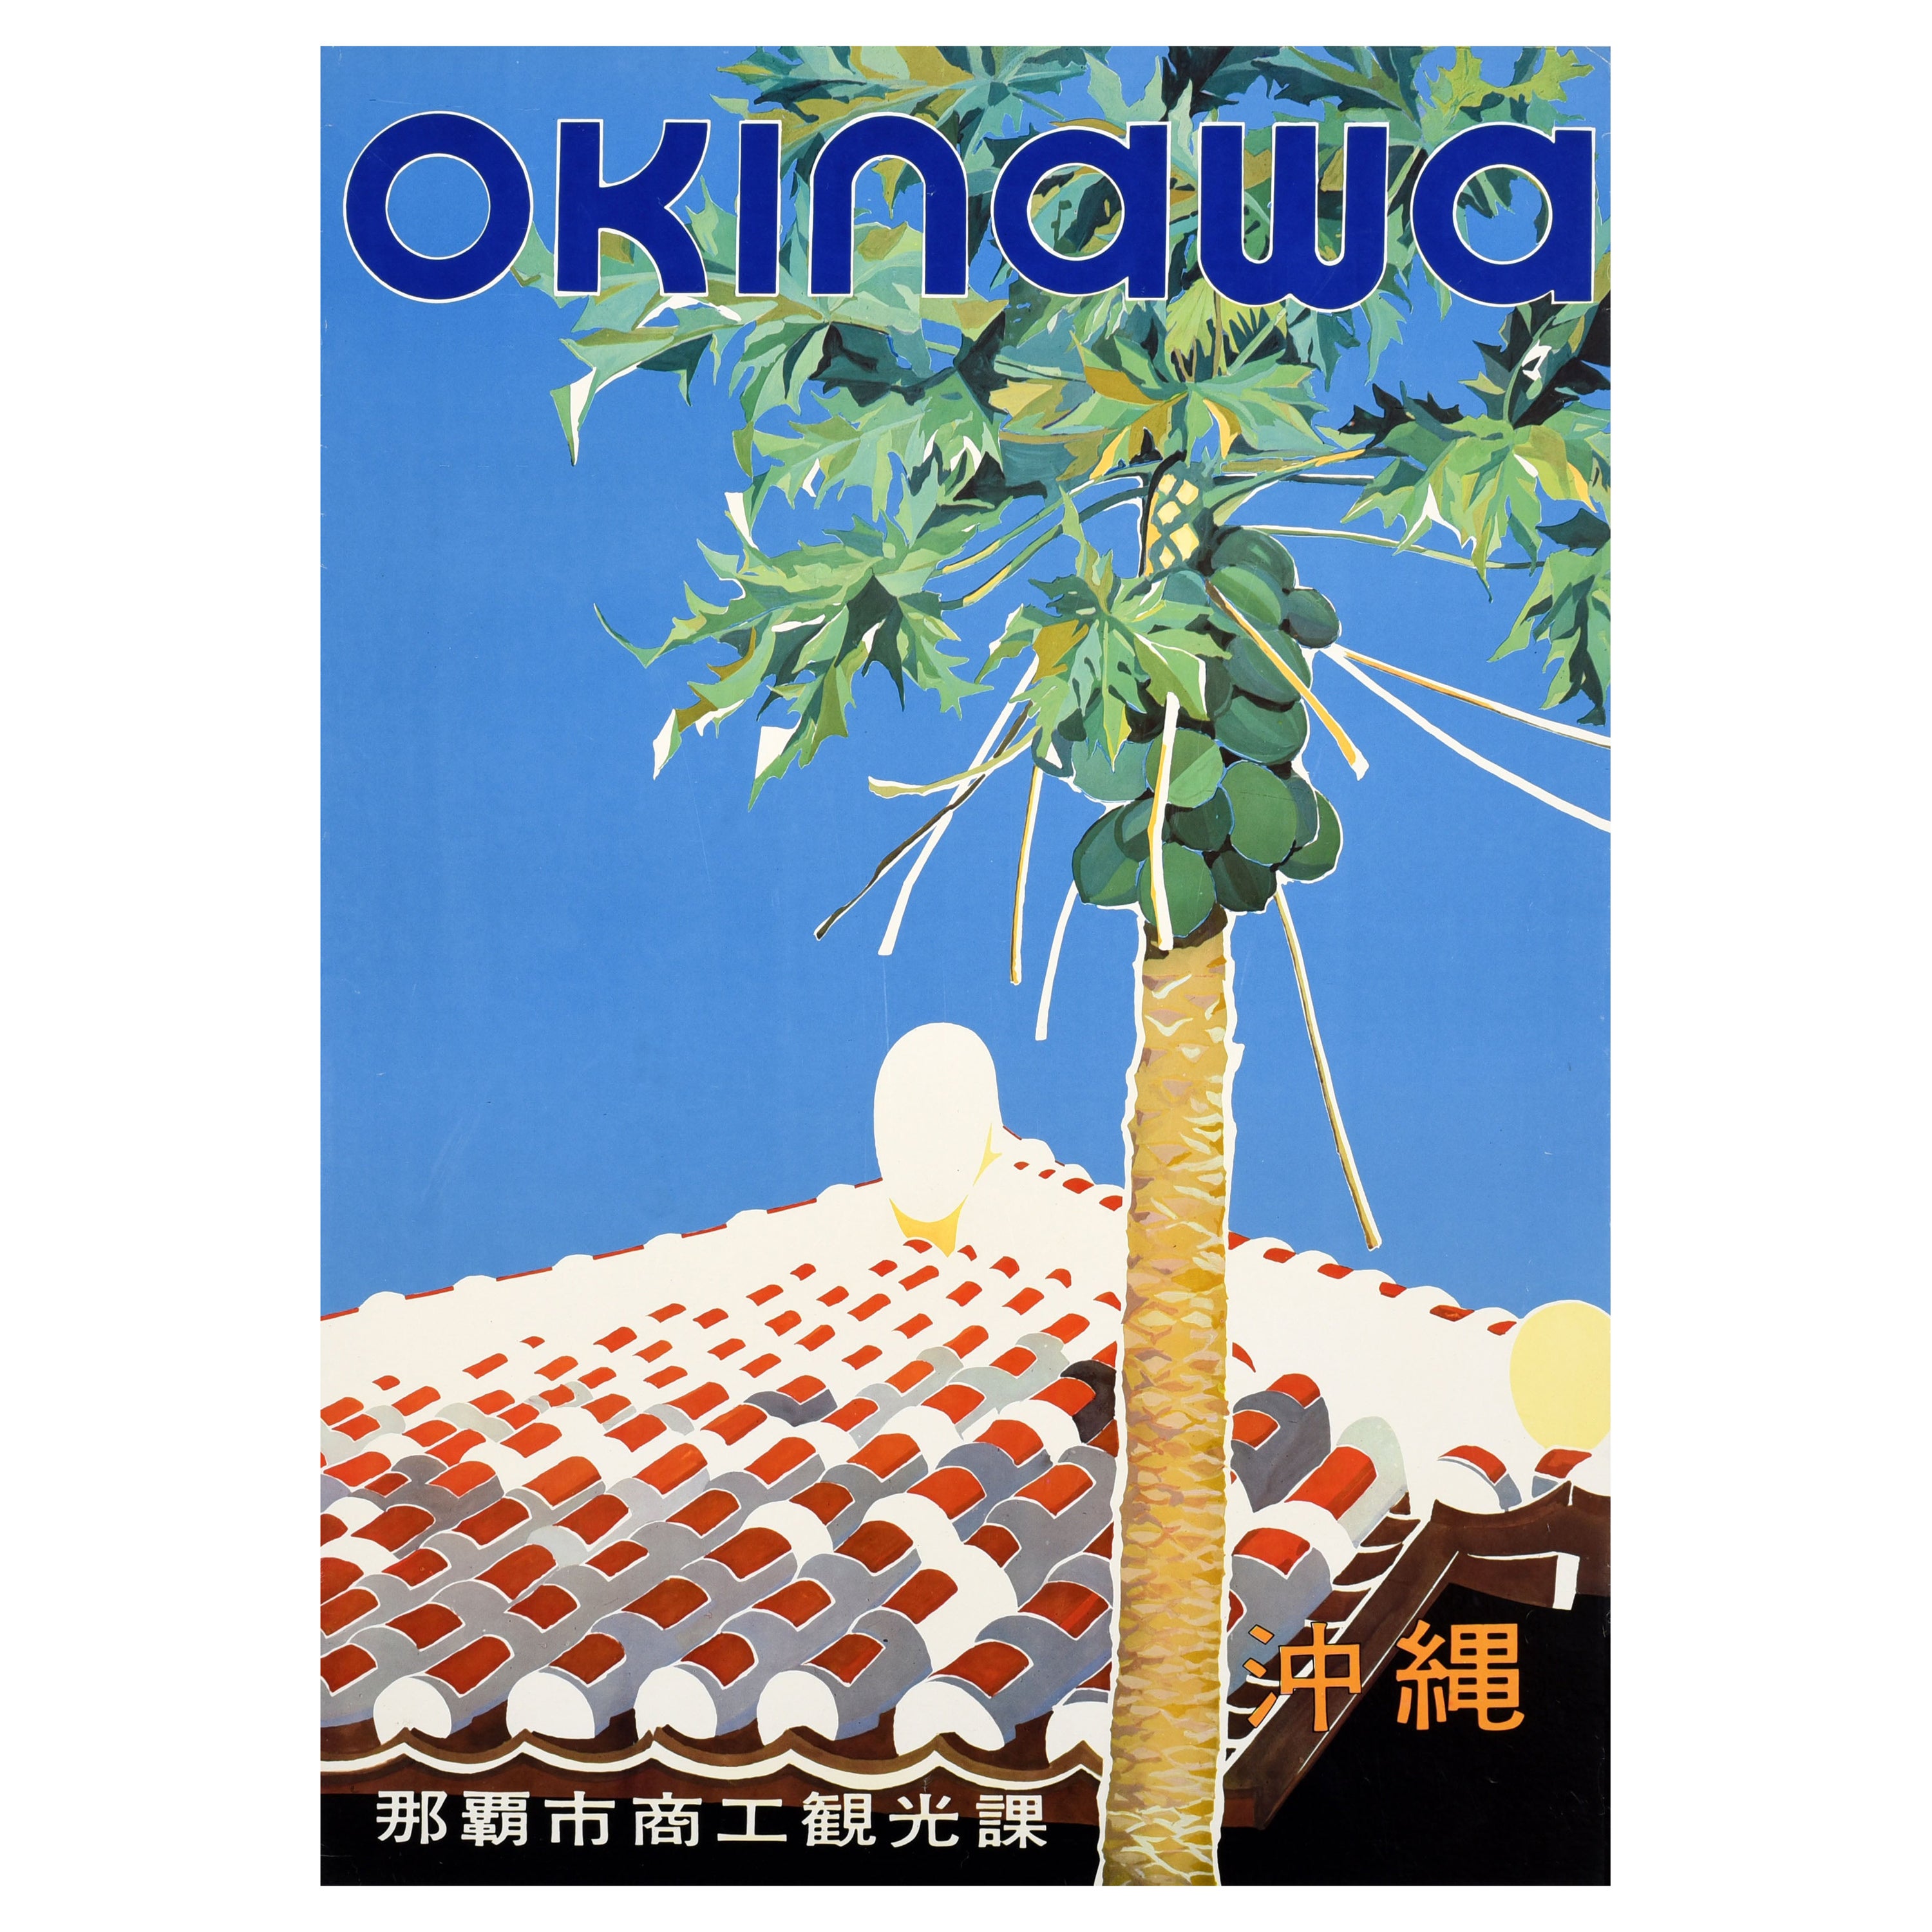 Original Vintage Asia Travel Poster Okinawa Naha City Shuri Castle Japan Papaya